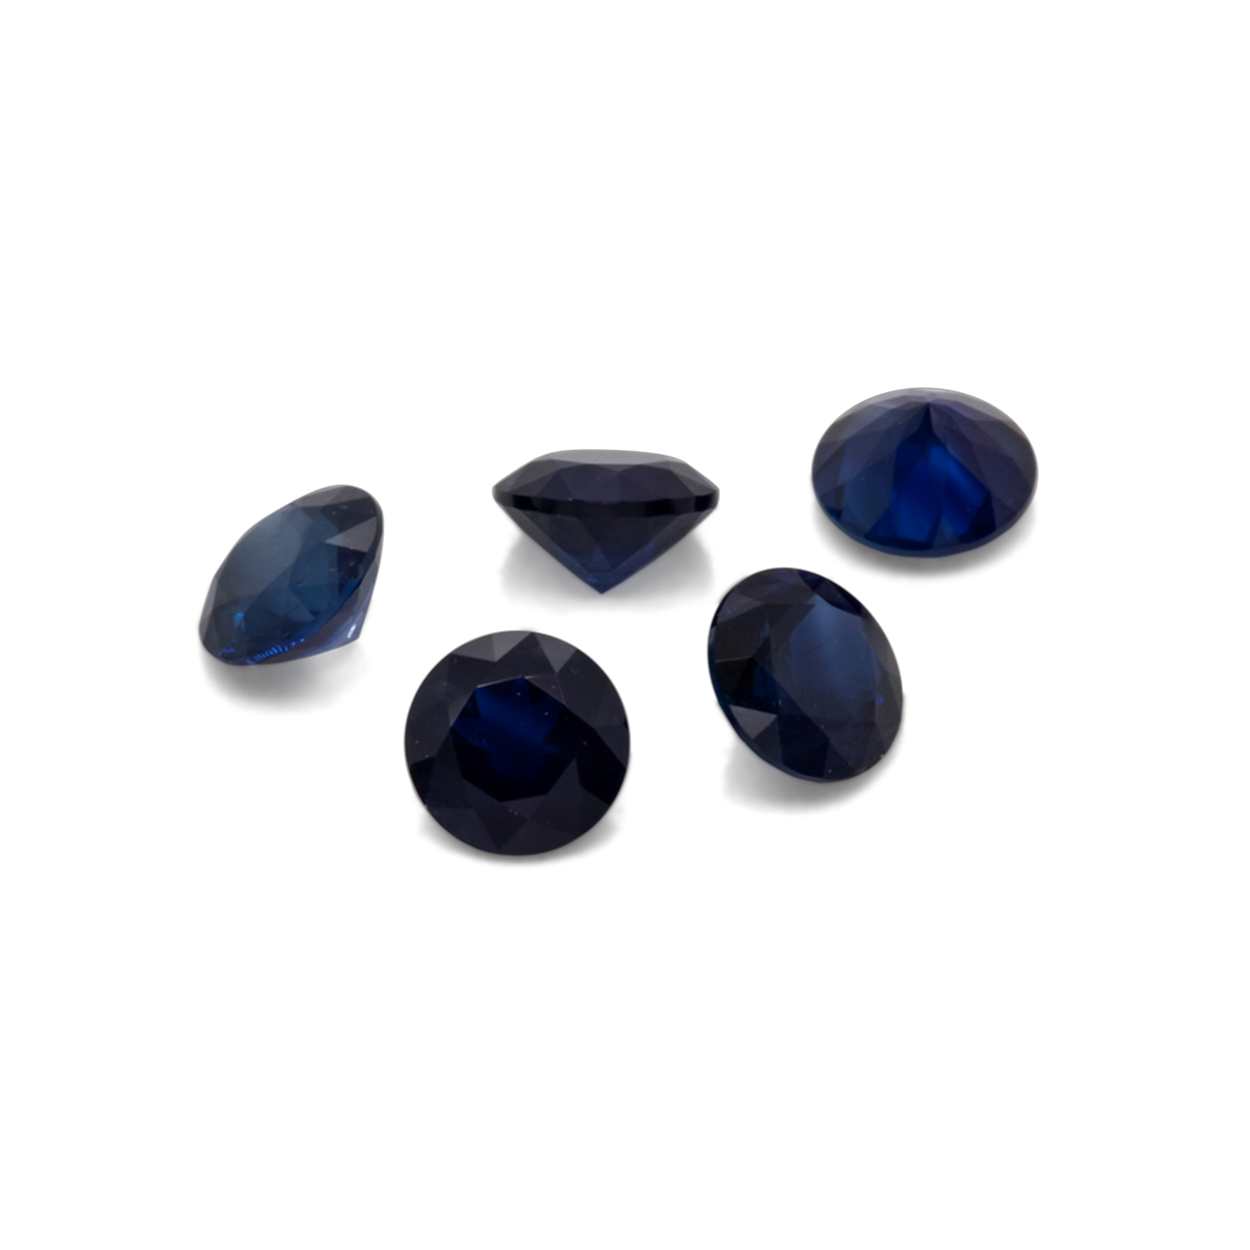 Sapphire - blue, round, 3x3 mm, 0.11-0.14 cts, No. XSR11232